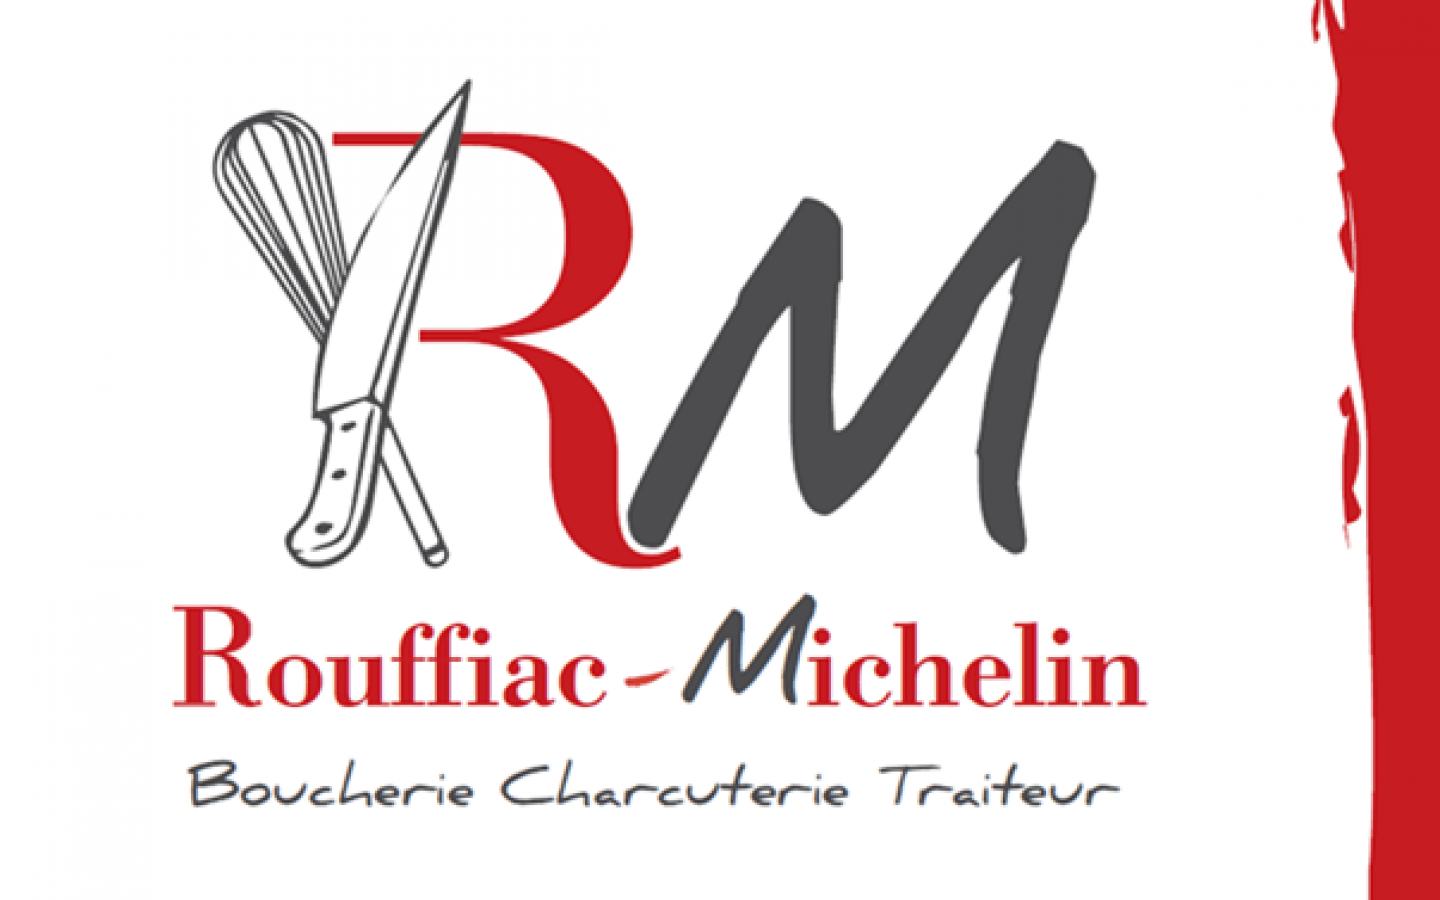 Boucherie charcuterie traiteur - rouffiac-michelin